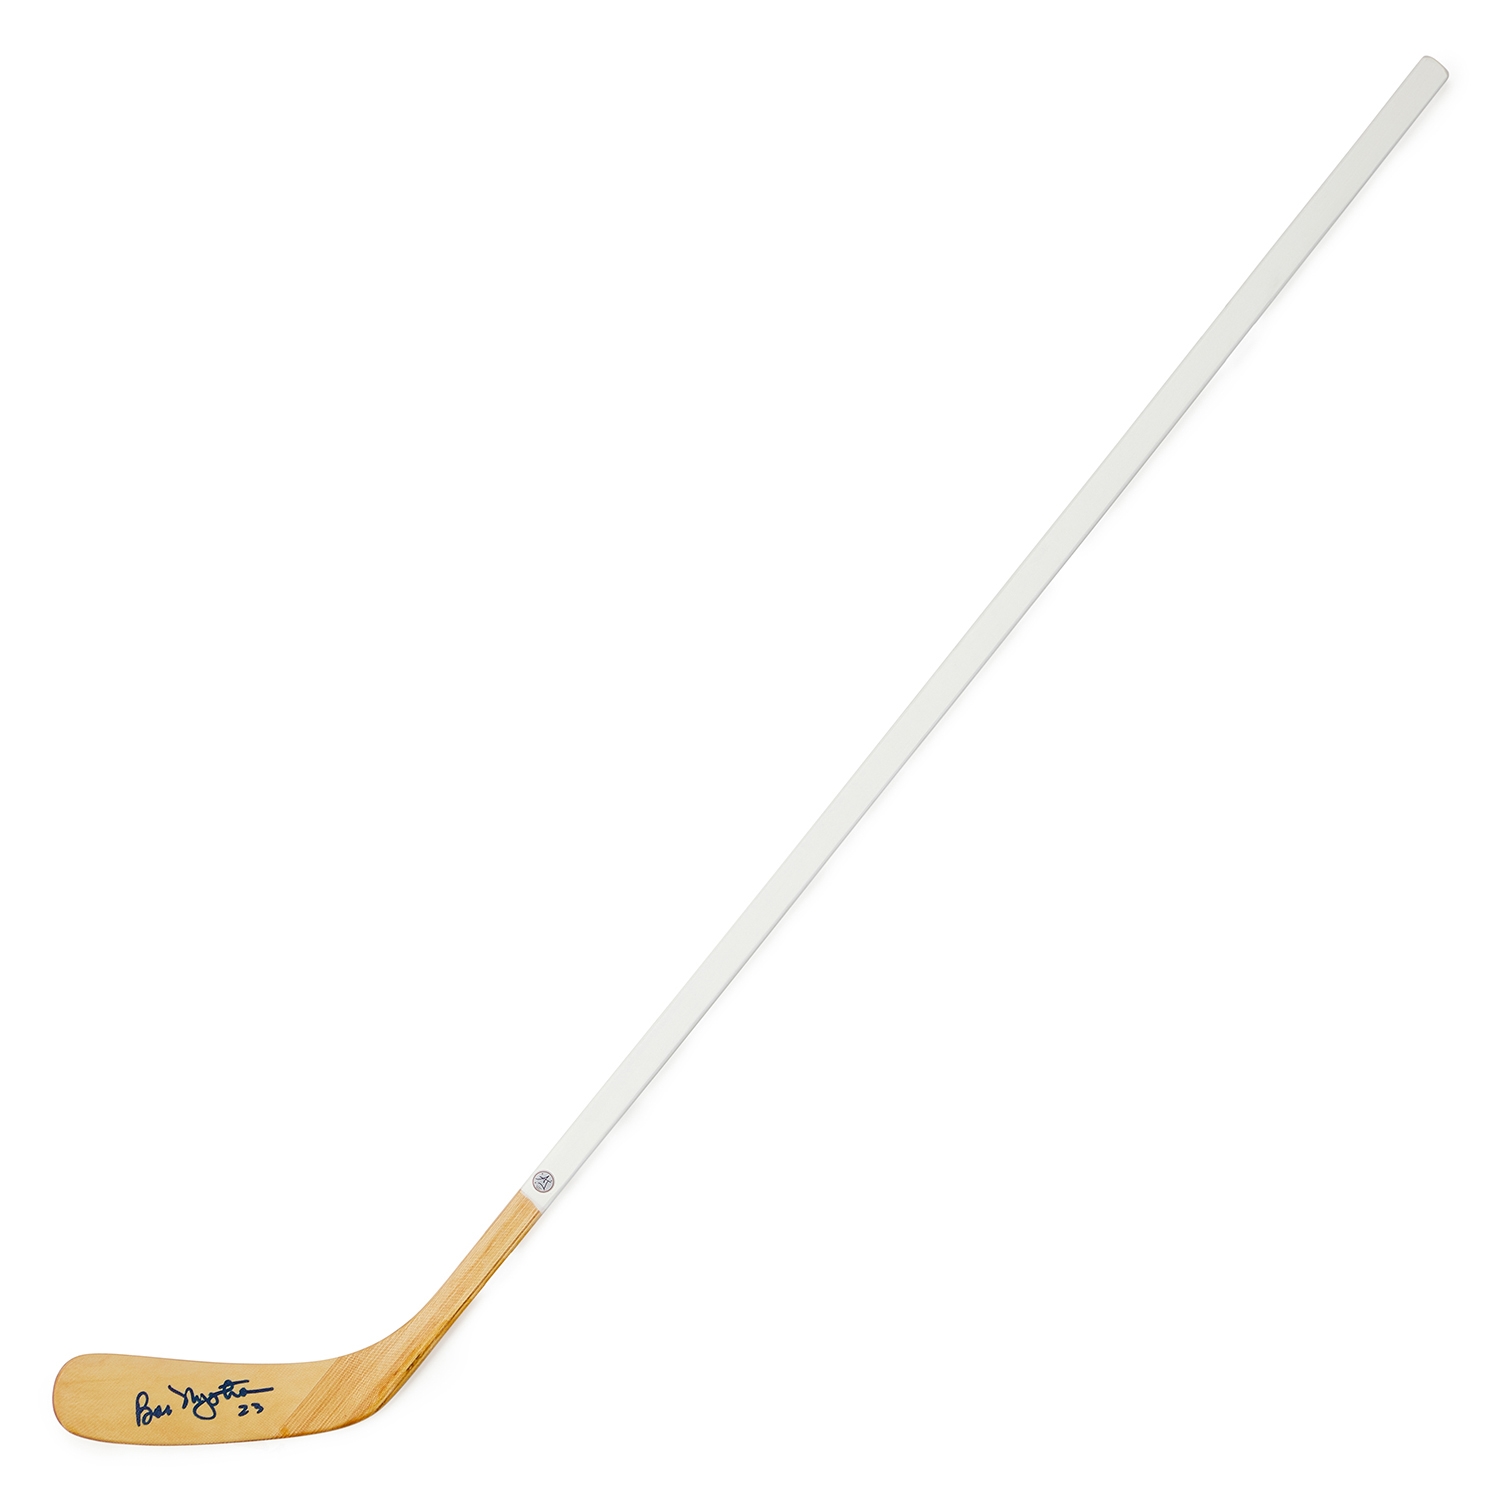 Bob Nystrom Autographed Hockey Stick